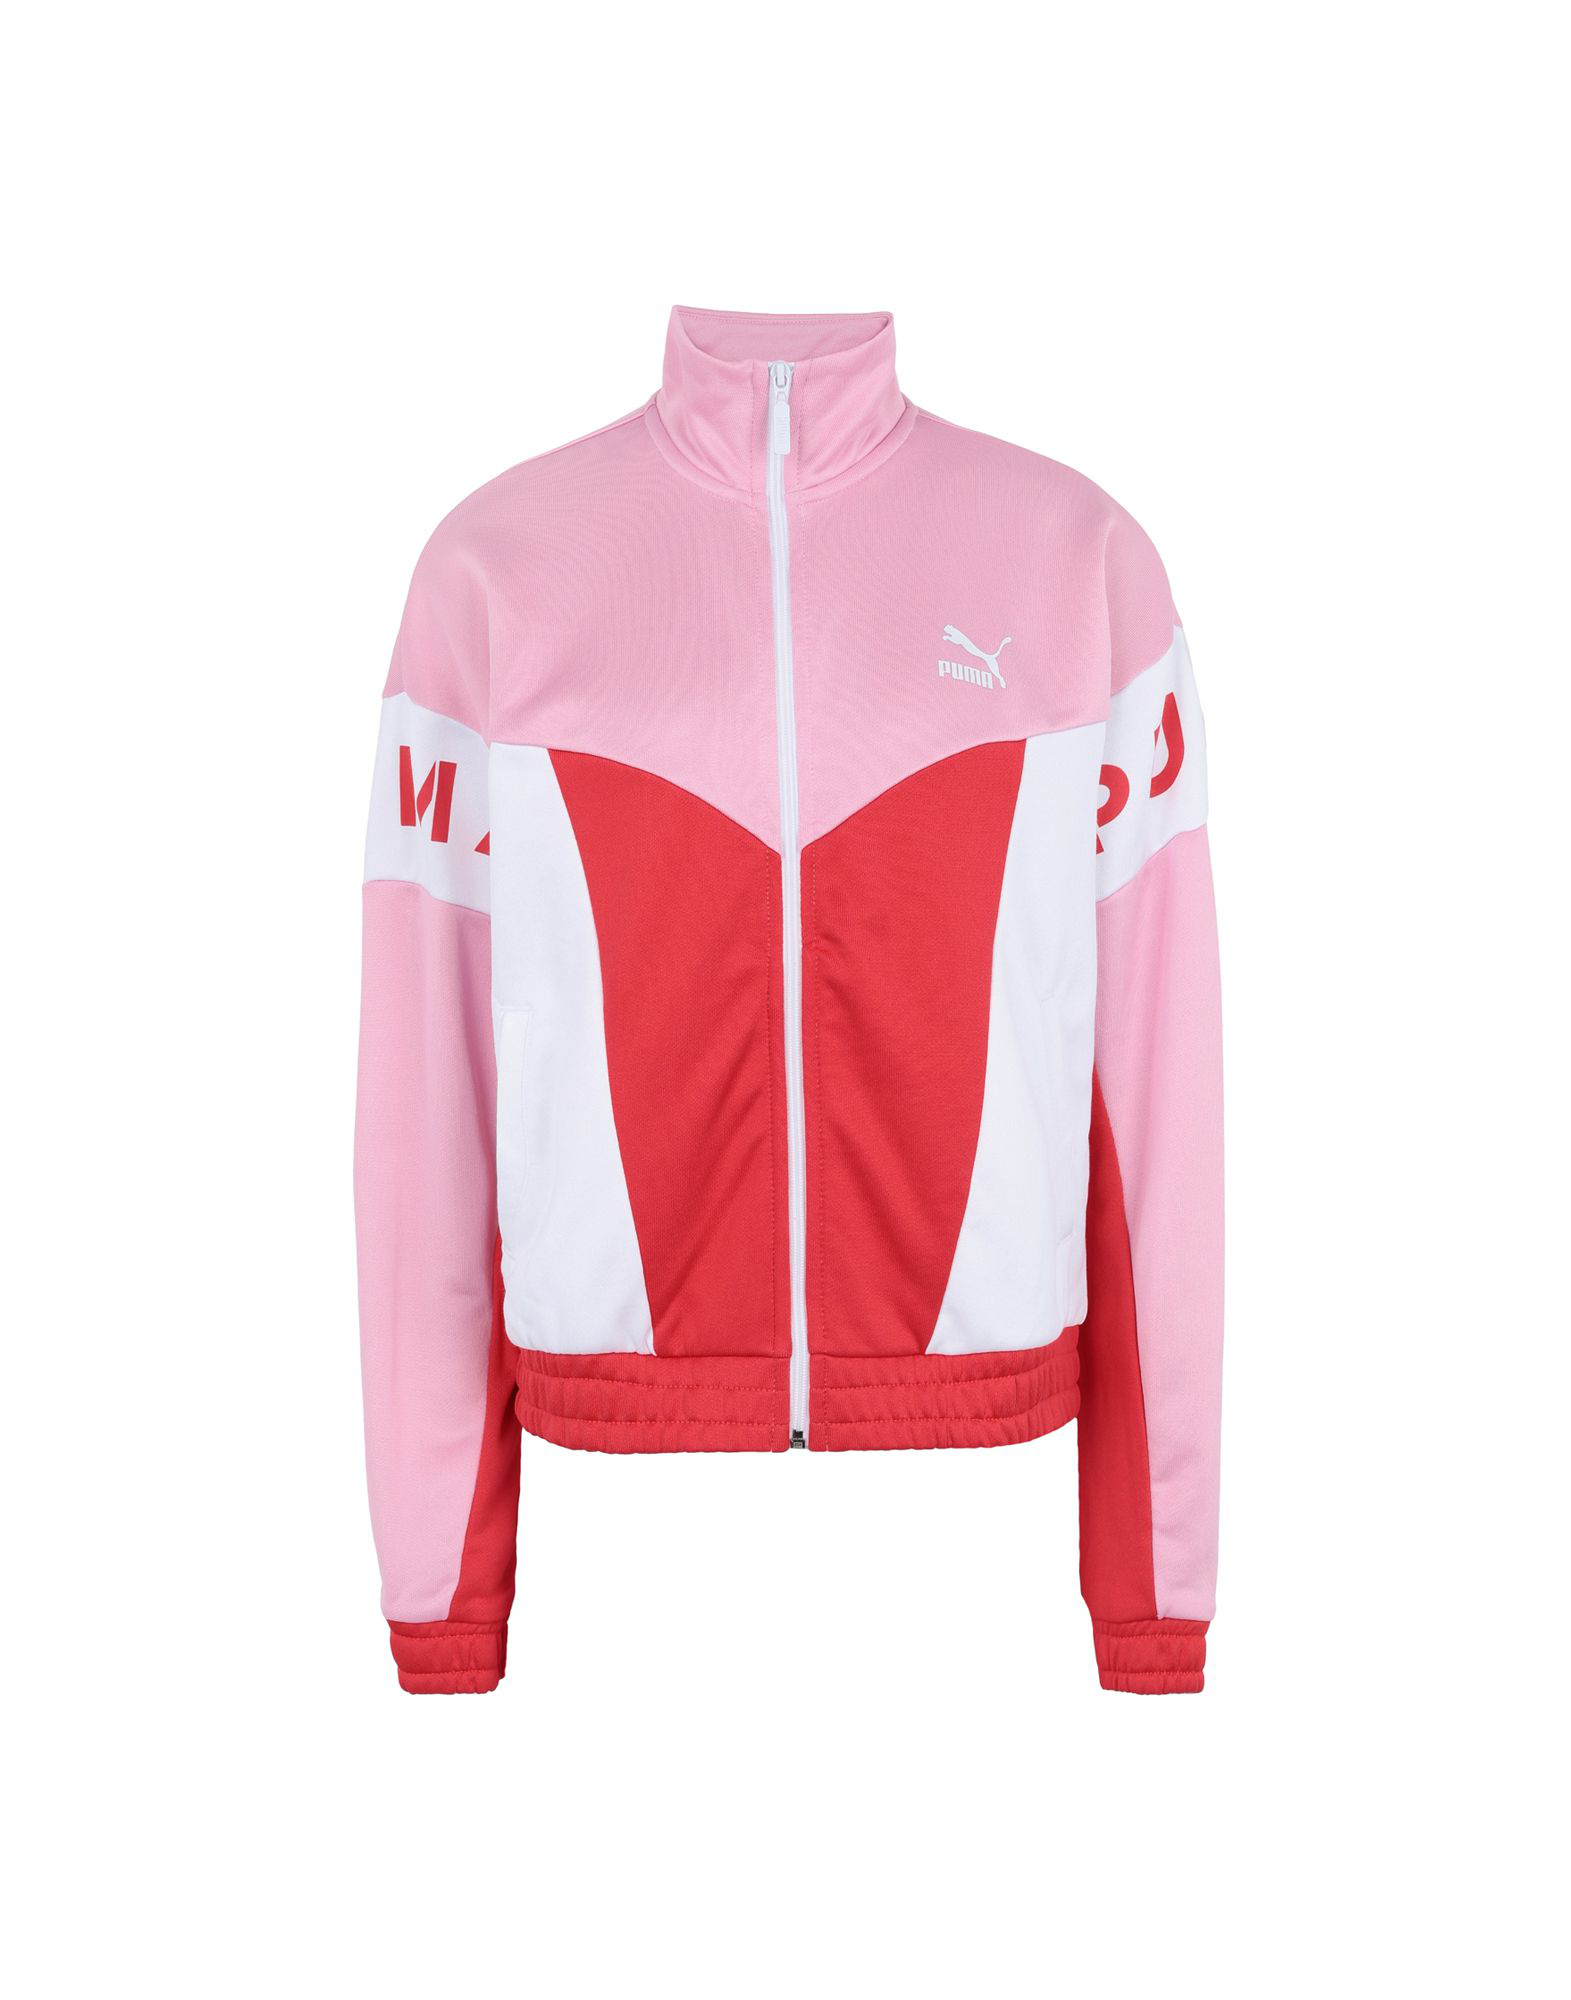 puma jacket pink Shop Clothing & Shoes Online